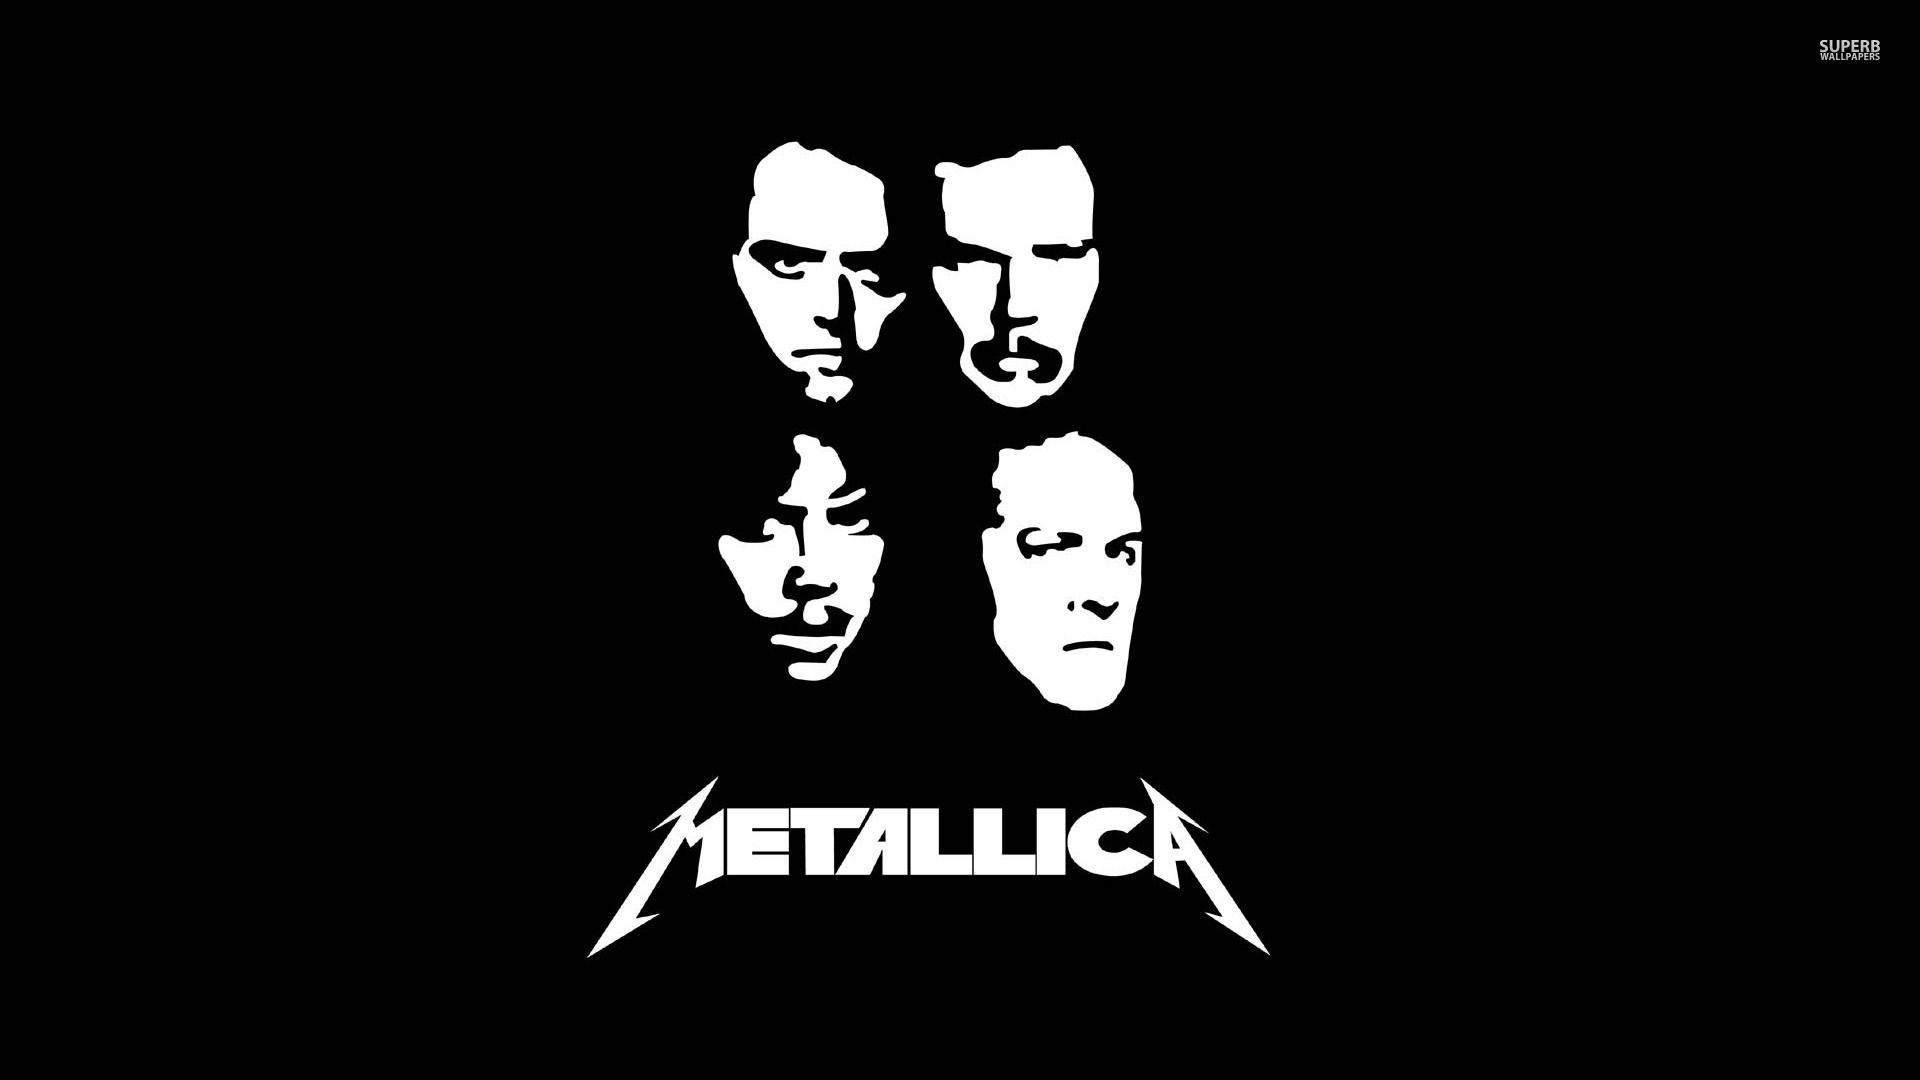 Metallica wallpaper - Music wallpapers -